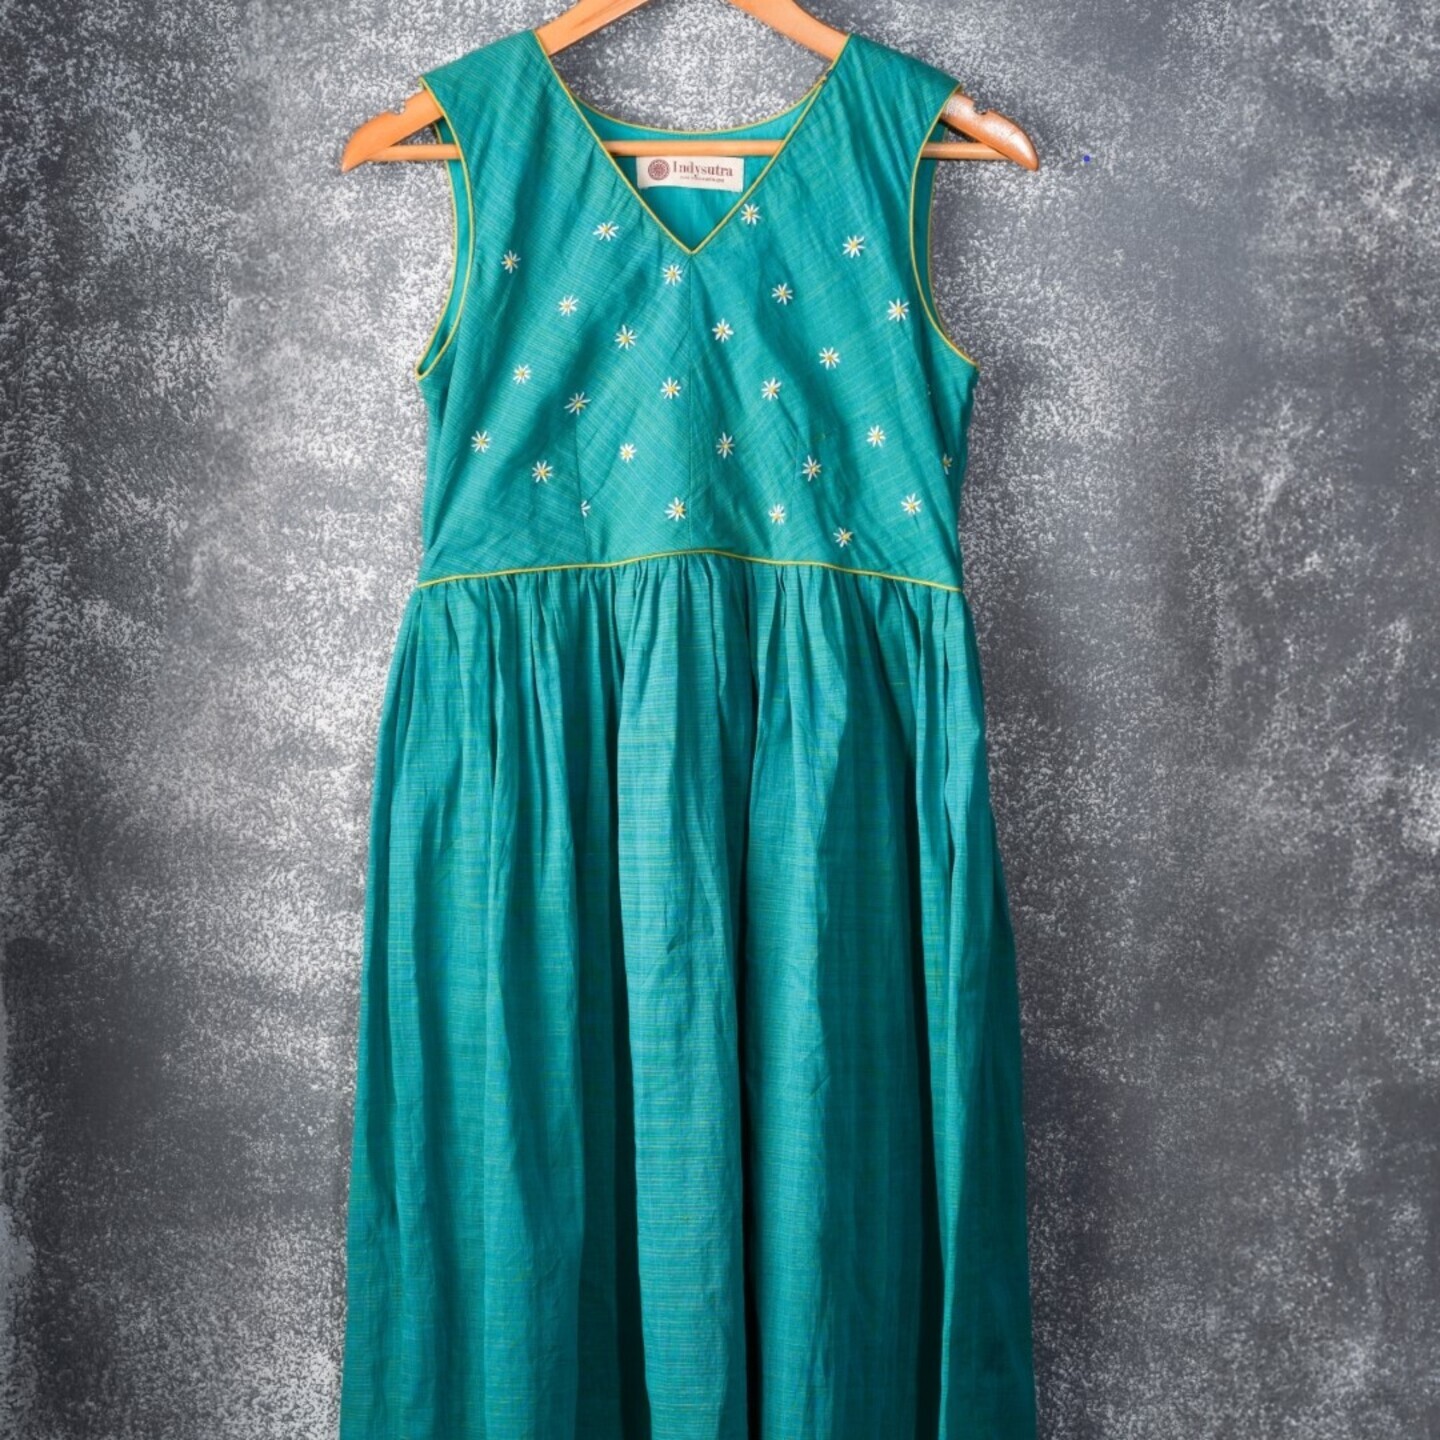 Green Kadhi and handwork dress - Ratna Prabha